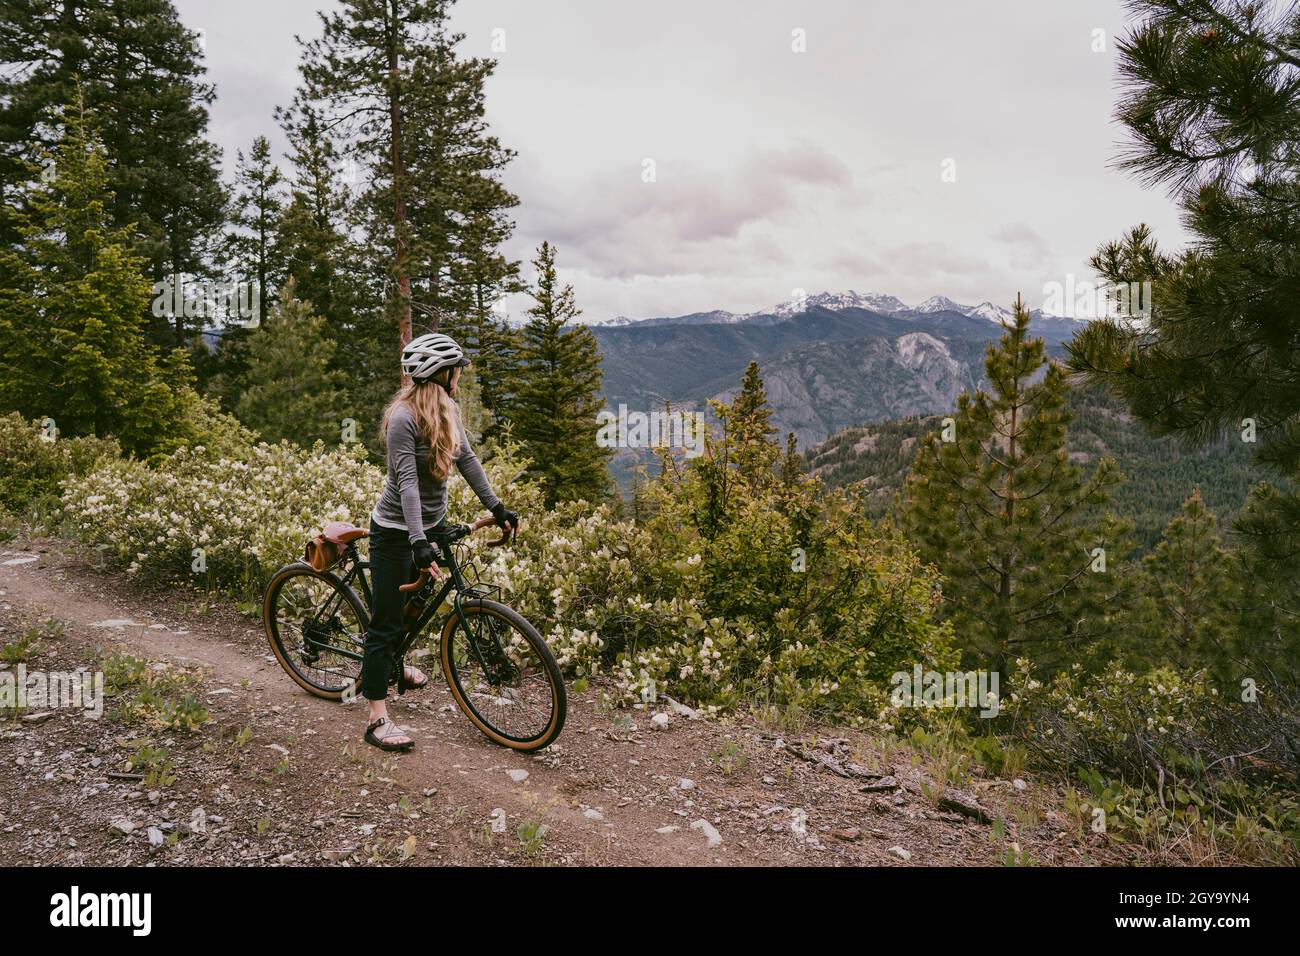 Woman bikes on rocky mountain trail and stops to enjoy view Stock Photo